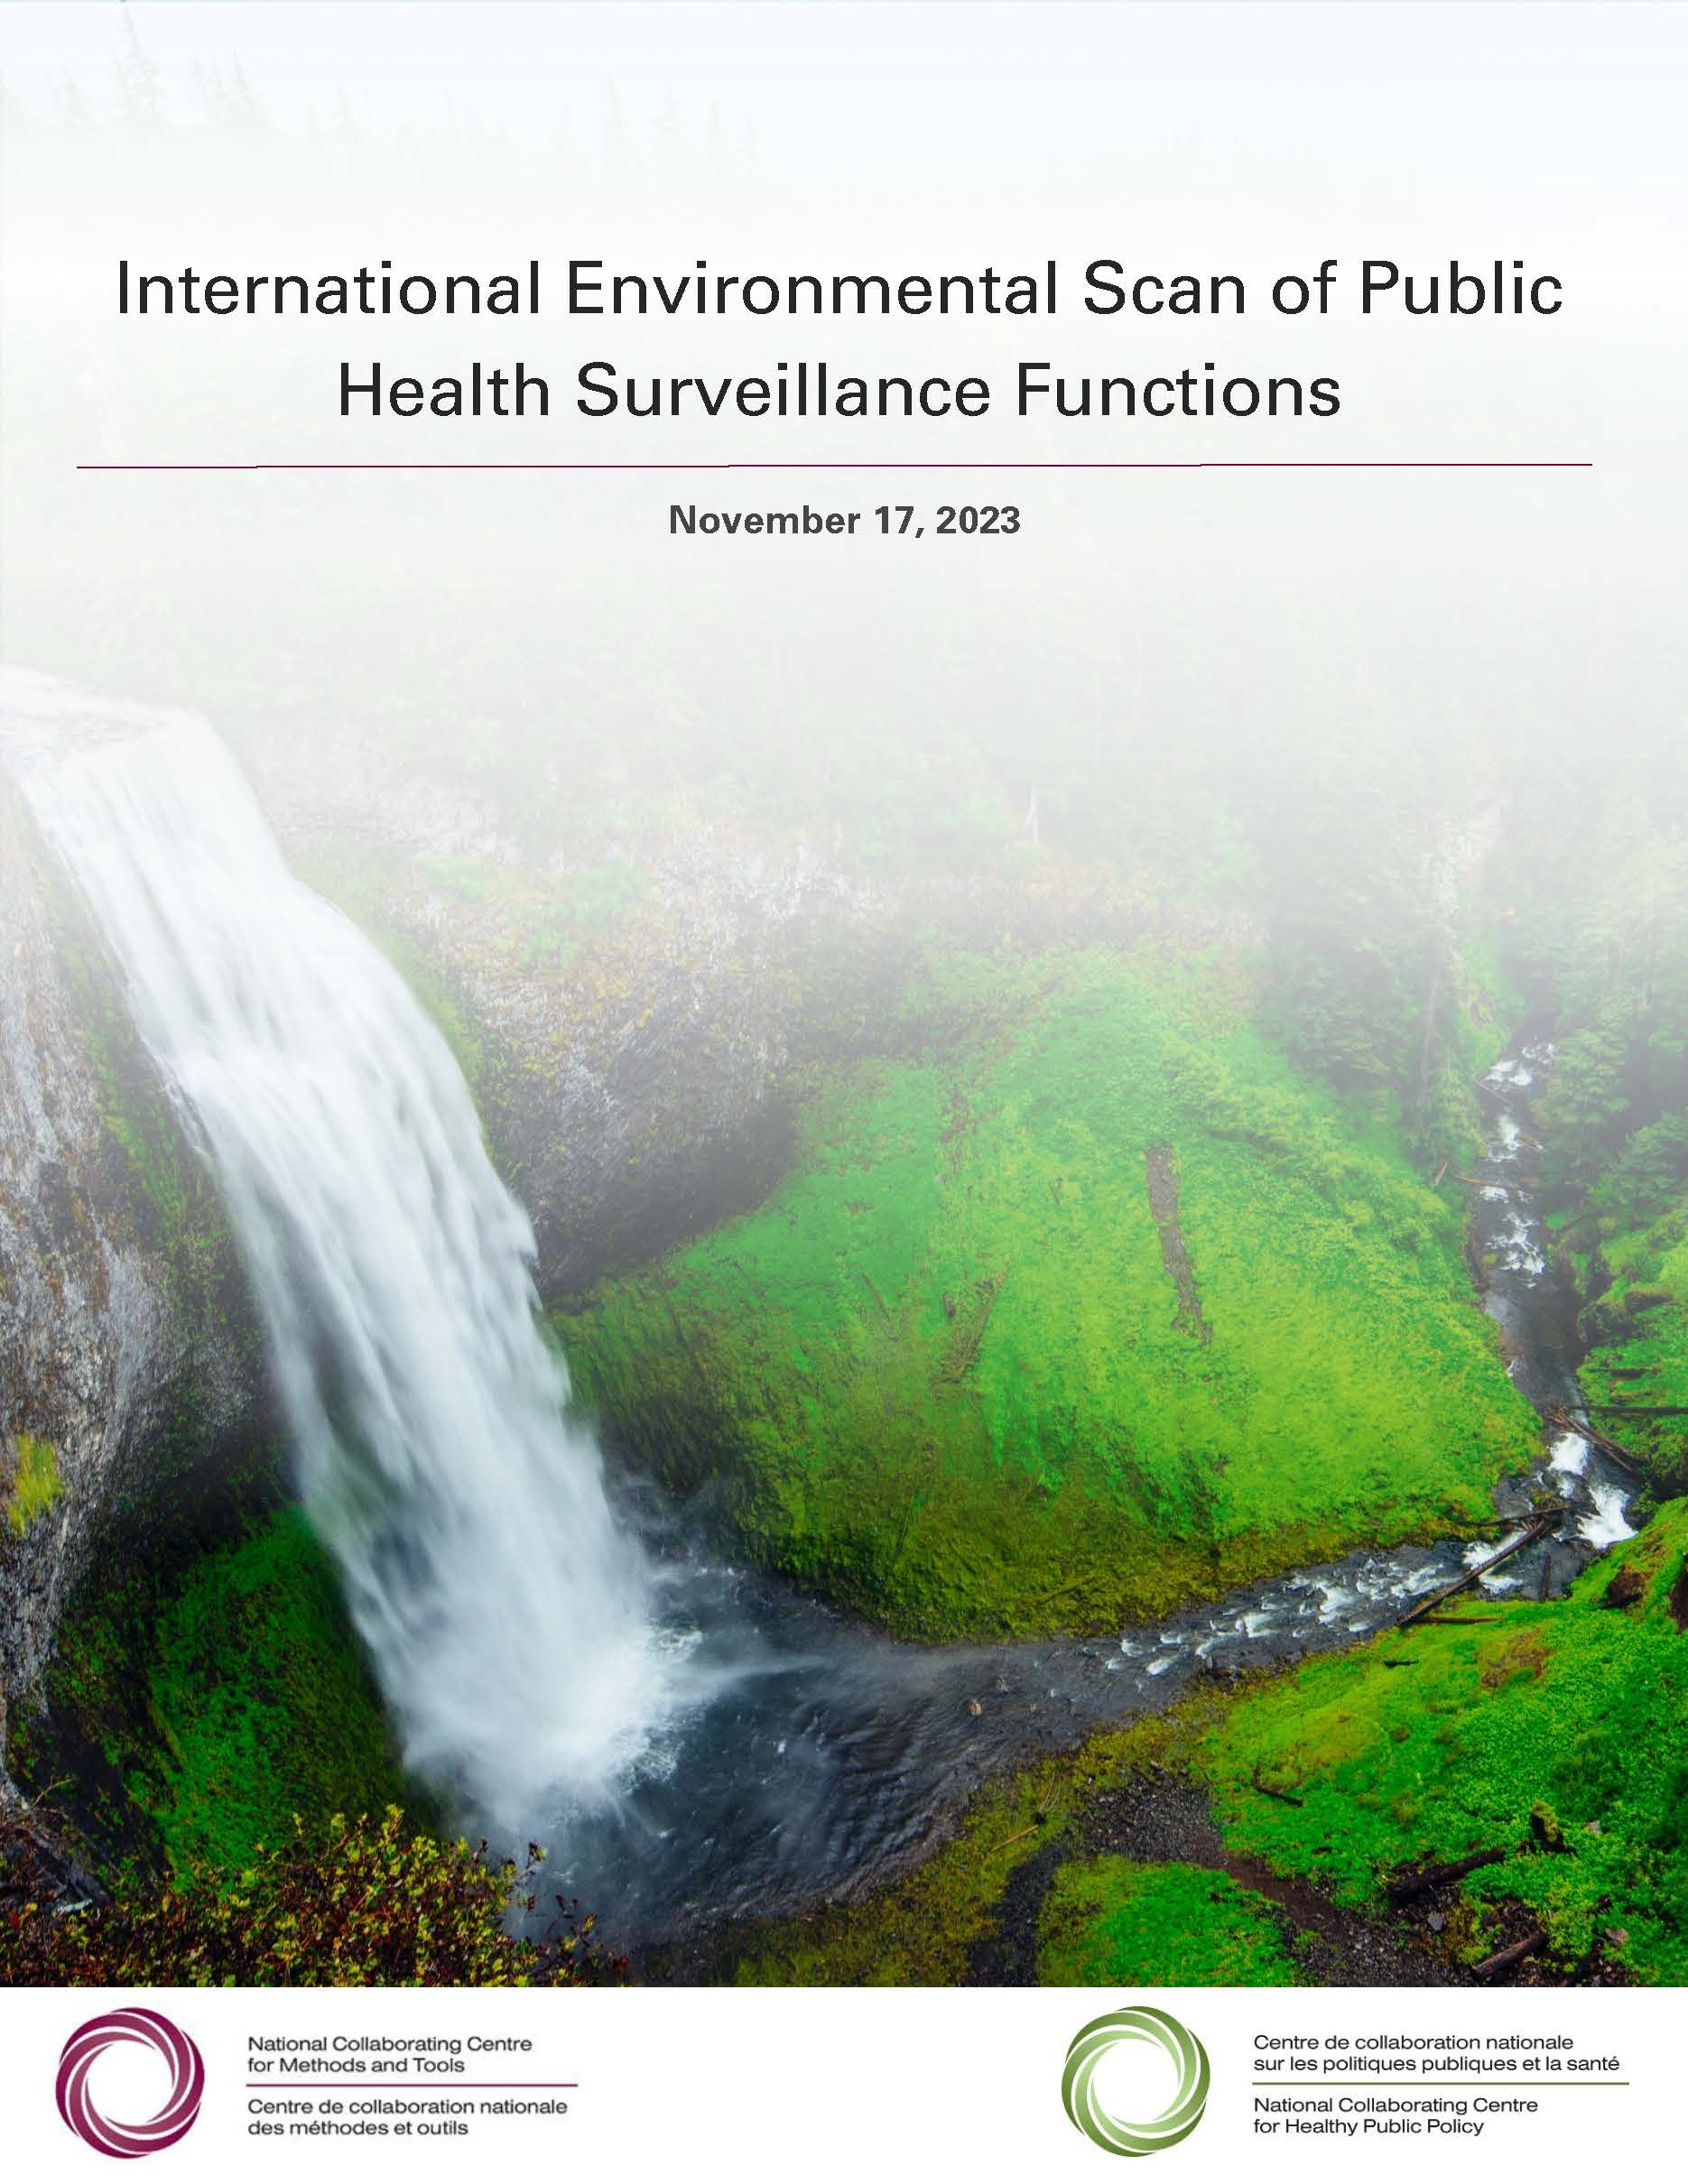 International environmental scan of public health surveillance functions